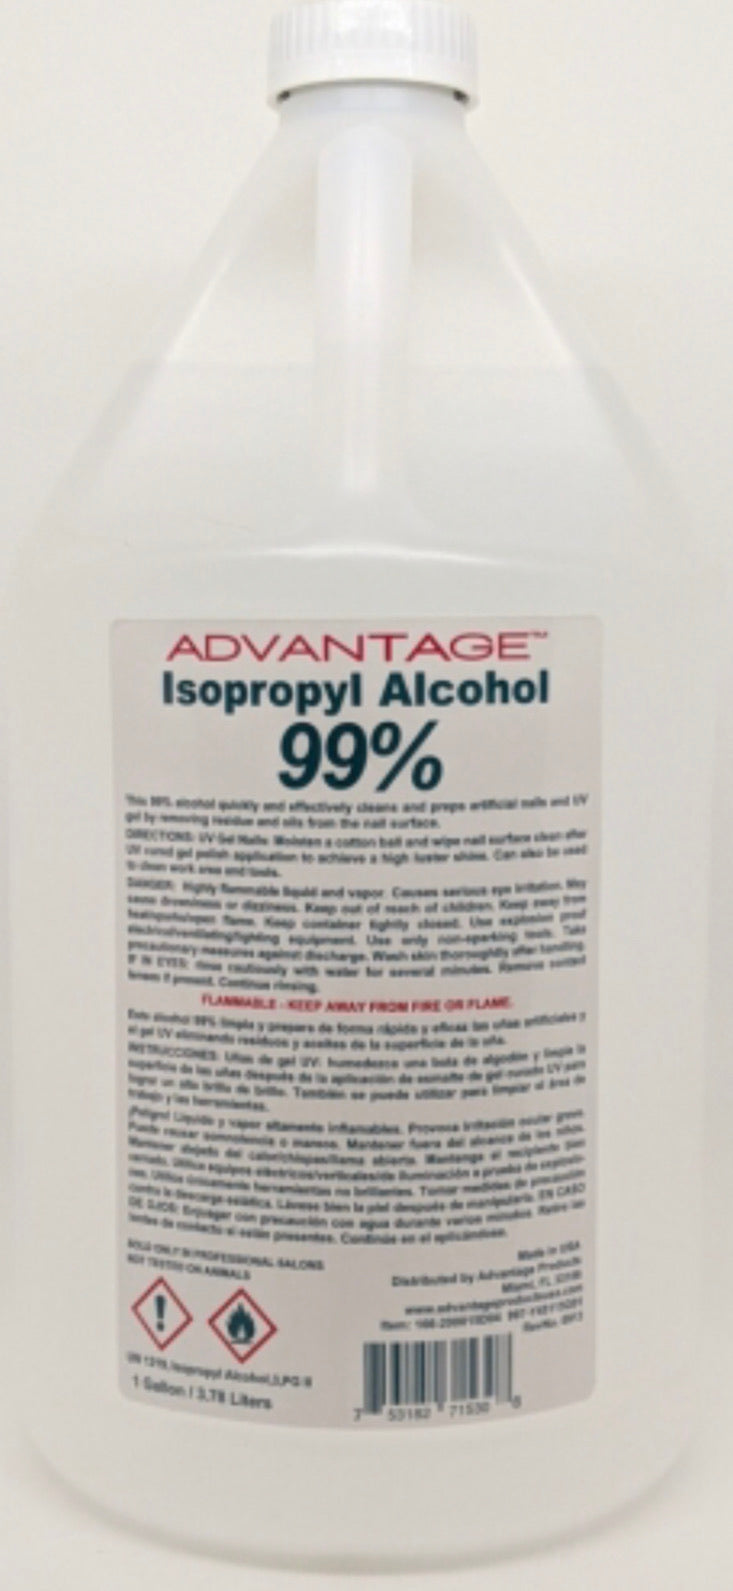 Advantage 99% Isopropyl Alcohol - 1 Gallon